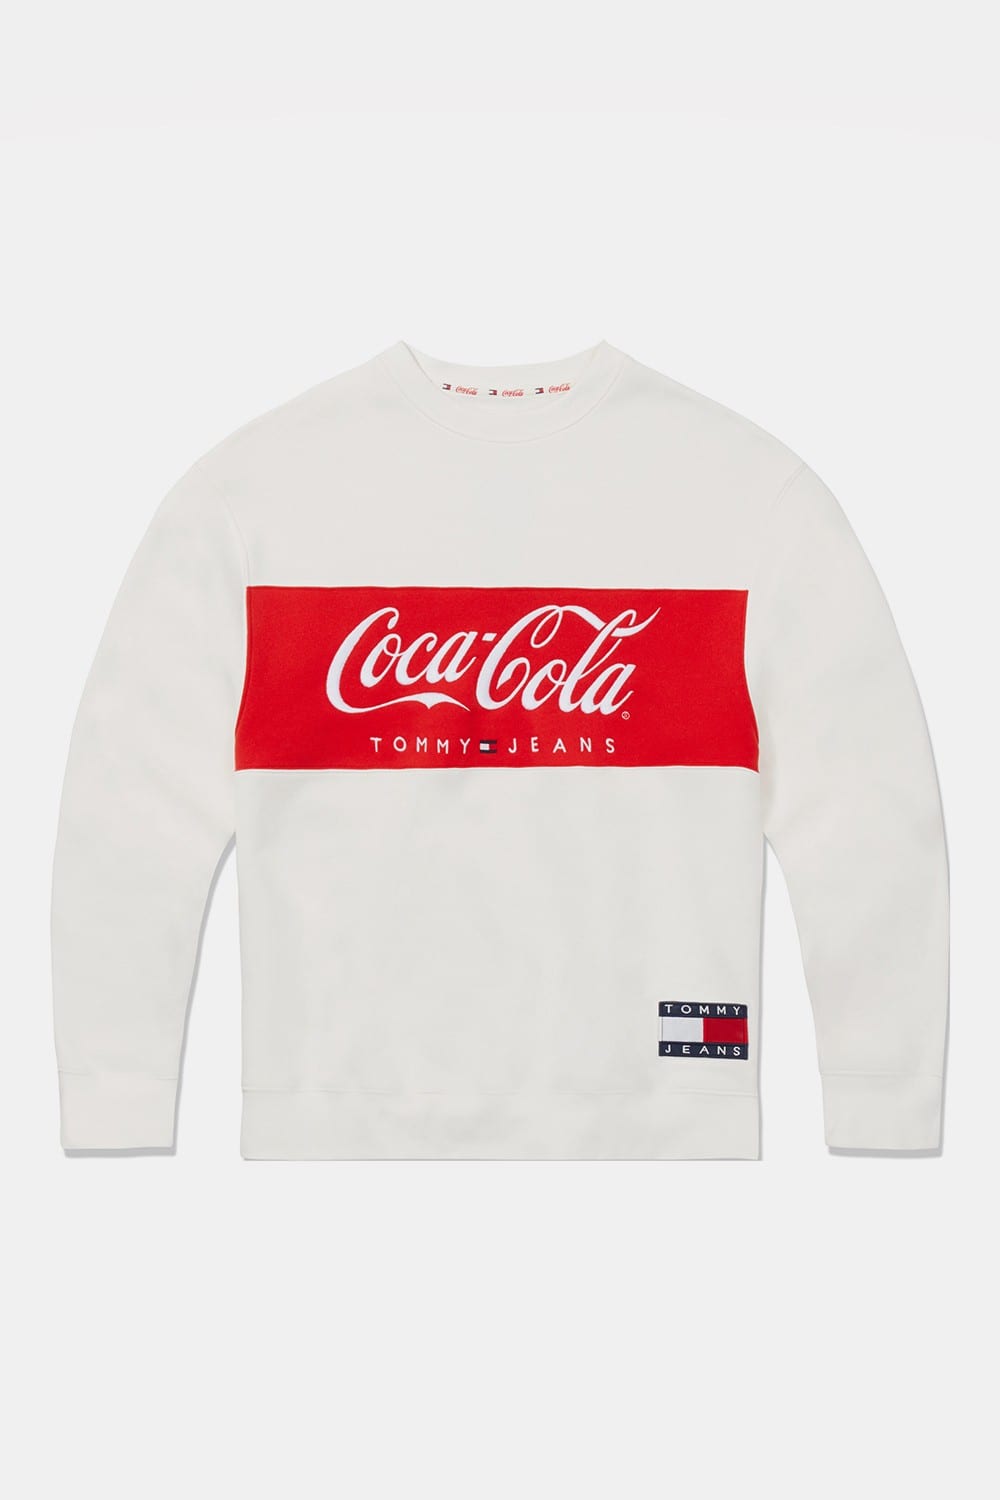 tommy hilfiger sweatshirt coca cola